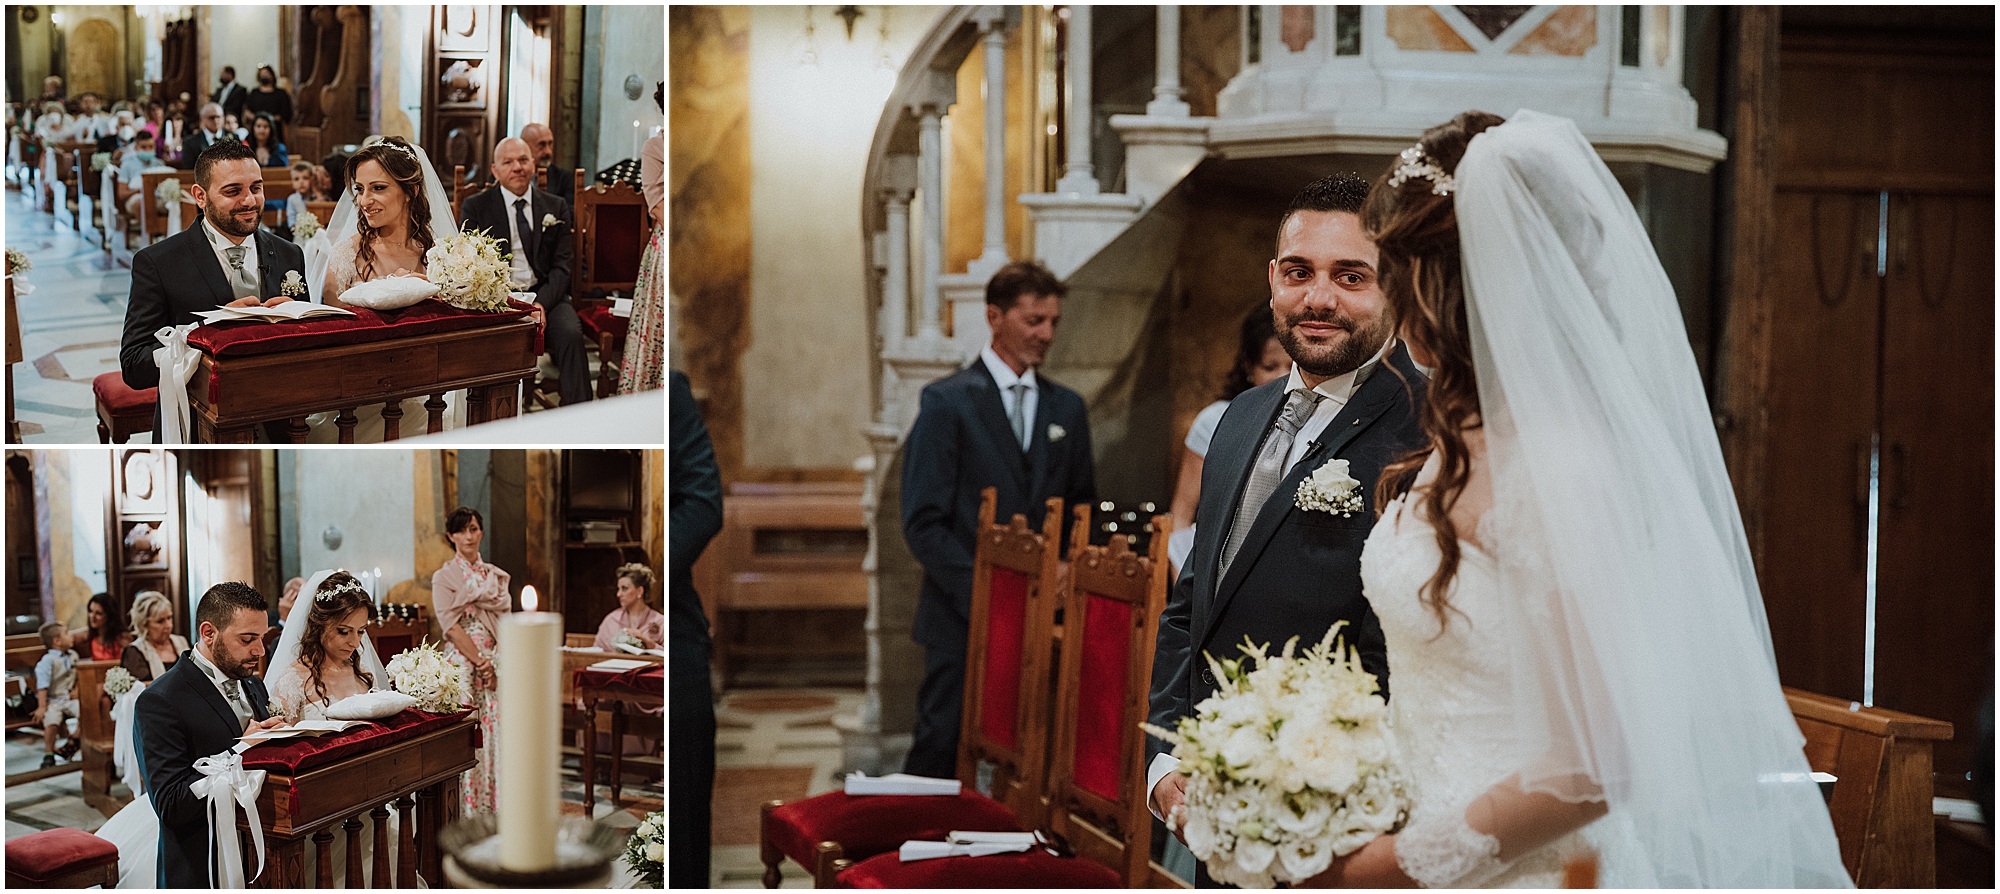 Francesco e Chiara: Fotografo Matrimonio Pistoia